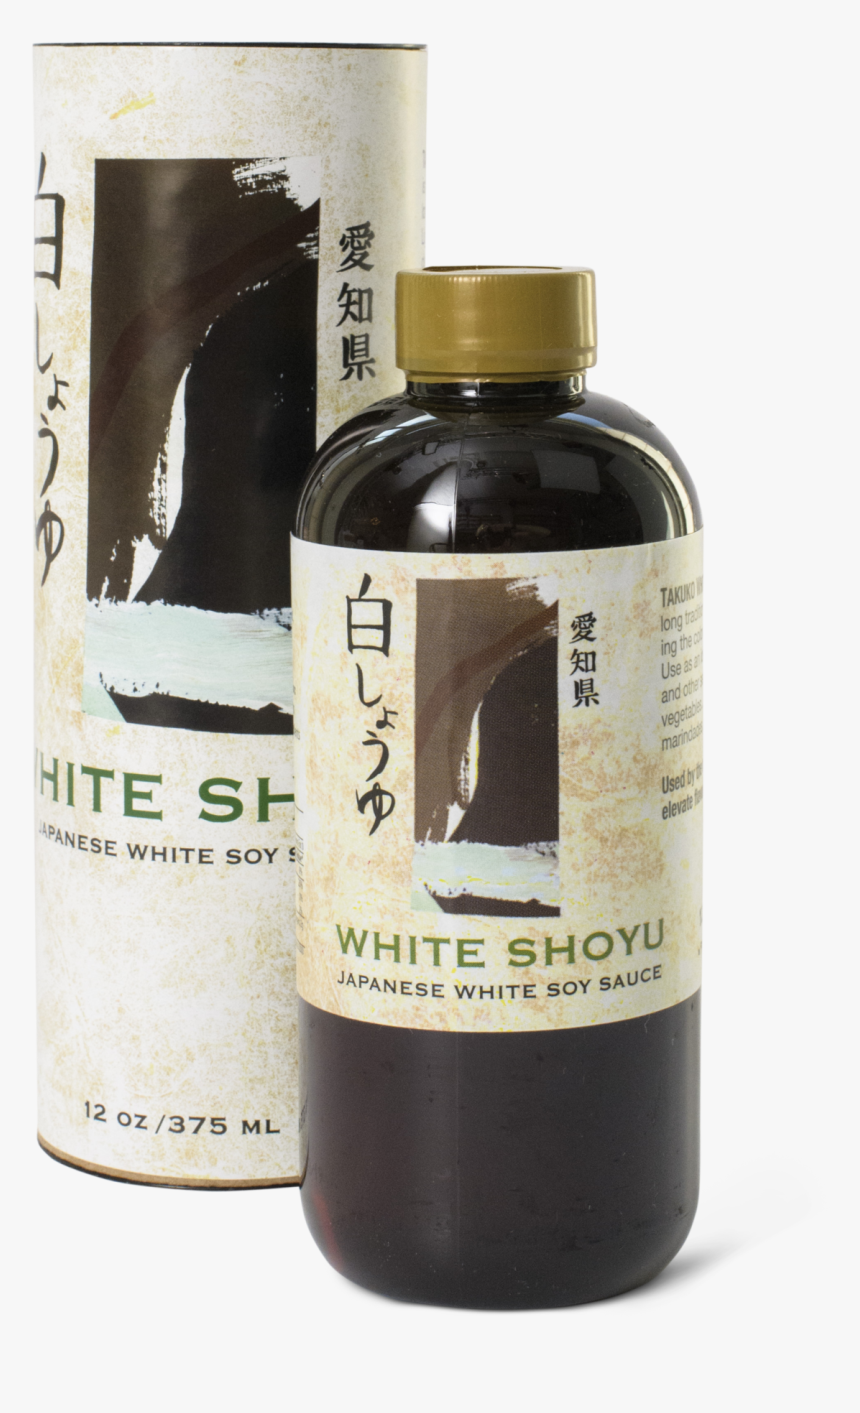 Takuko White Soy Sauce - Takuko White Shoyu Japanese White Soy Sauce 375ml, HD Png Download, Free Download